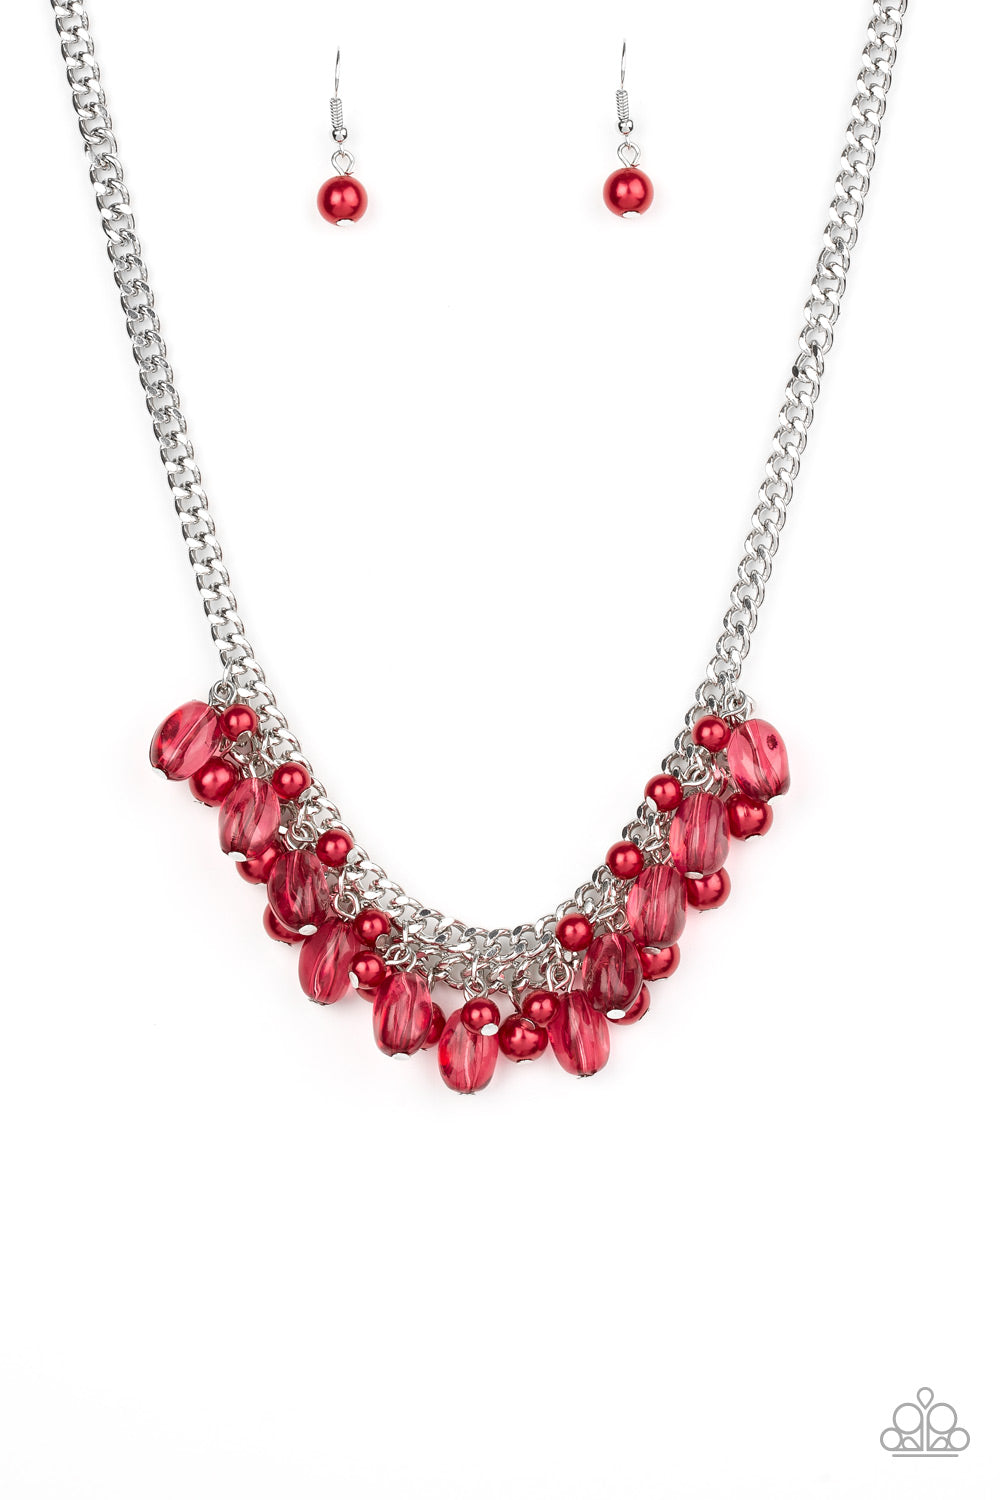 5th Avenue Flirtation Red Paparazzi Necklaces Cashmere Pink Jewels - Cashmere Pink Jewels & Accessories, Cashmere Pink Jewels & Accessories - Paparazzi